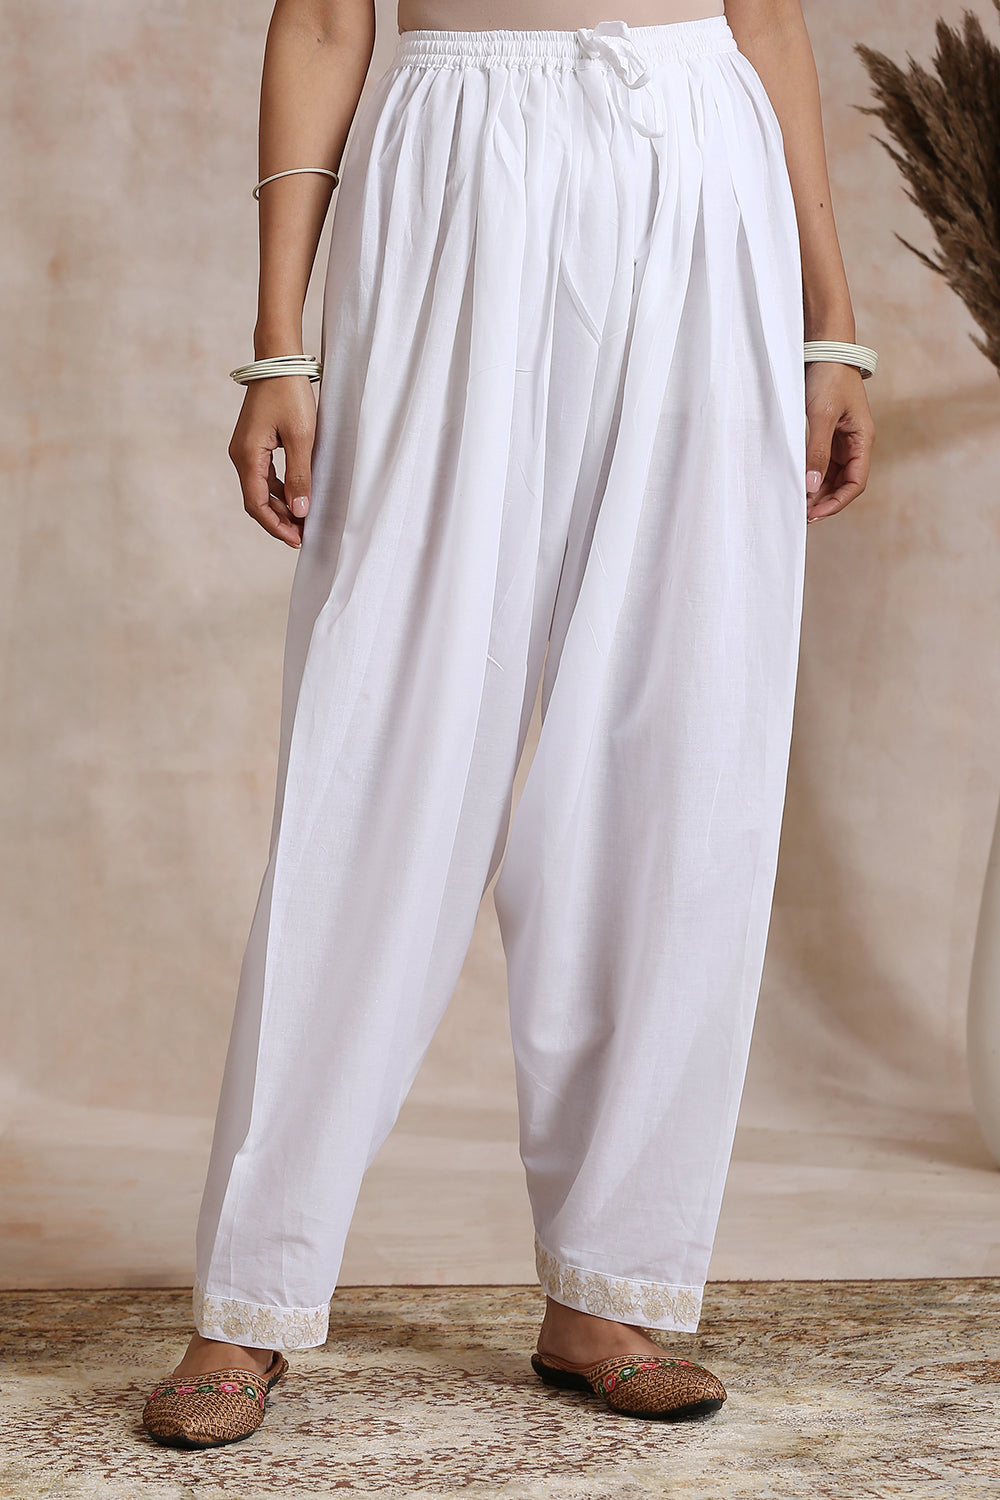 Patiala Salwar Pants Dupion Silk For Men Handmade Festival Occasion Party  Wear | eBay